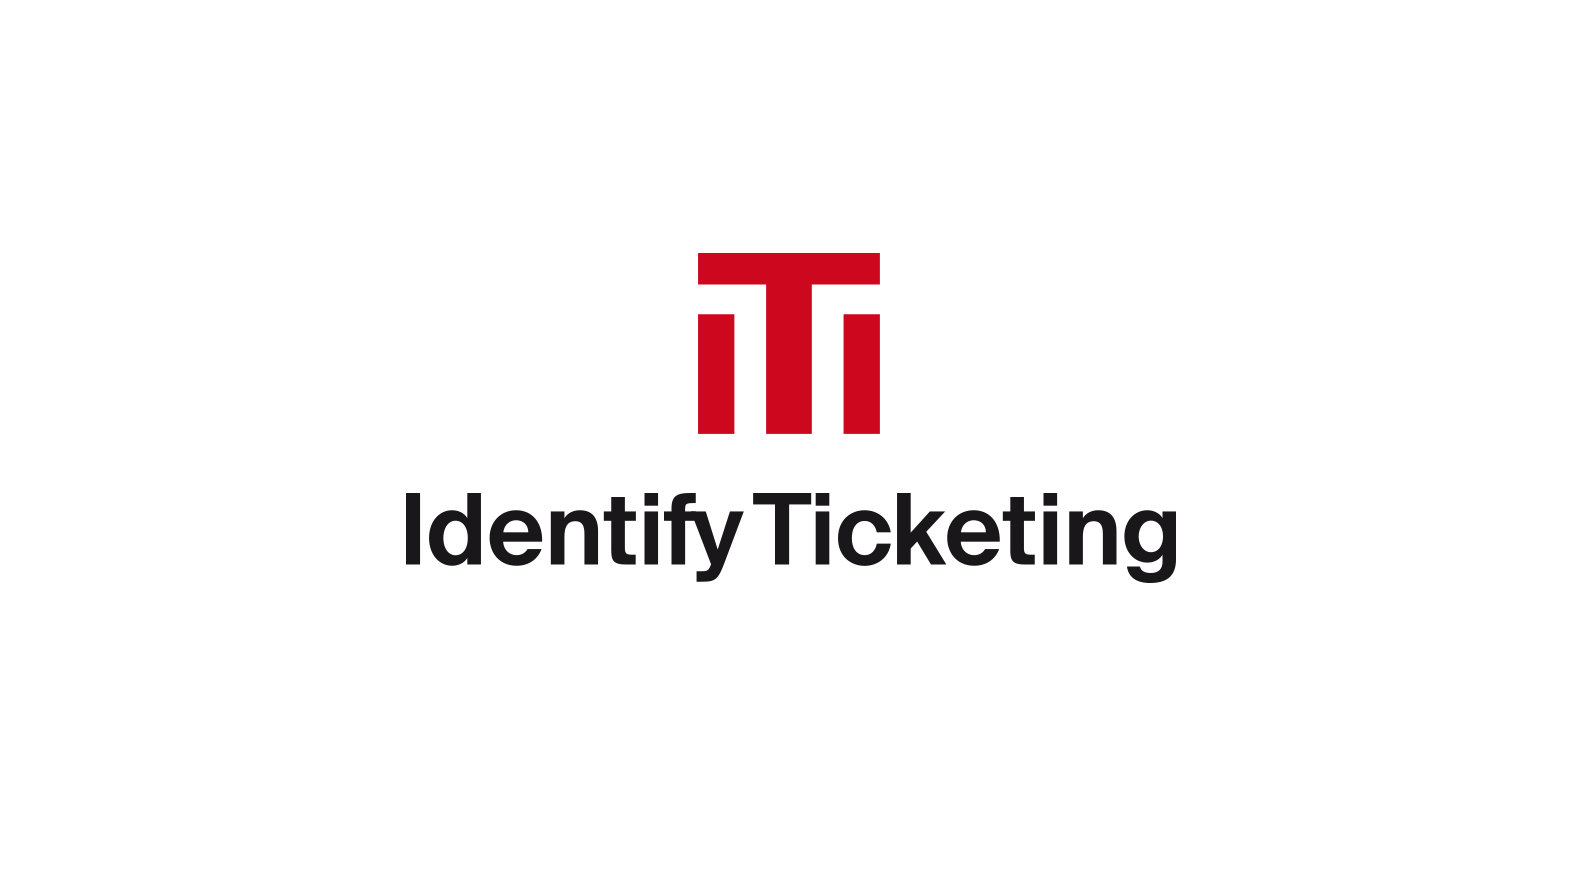 Logo Design identify Ticketing London